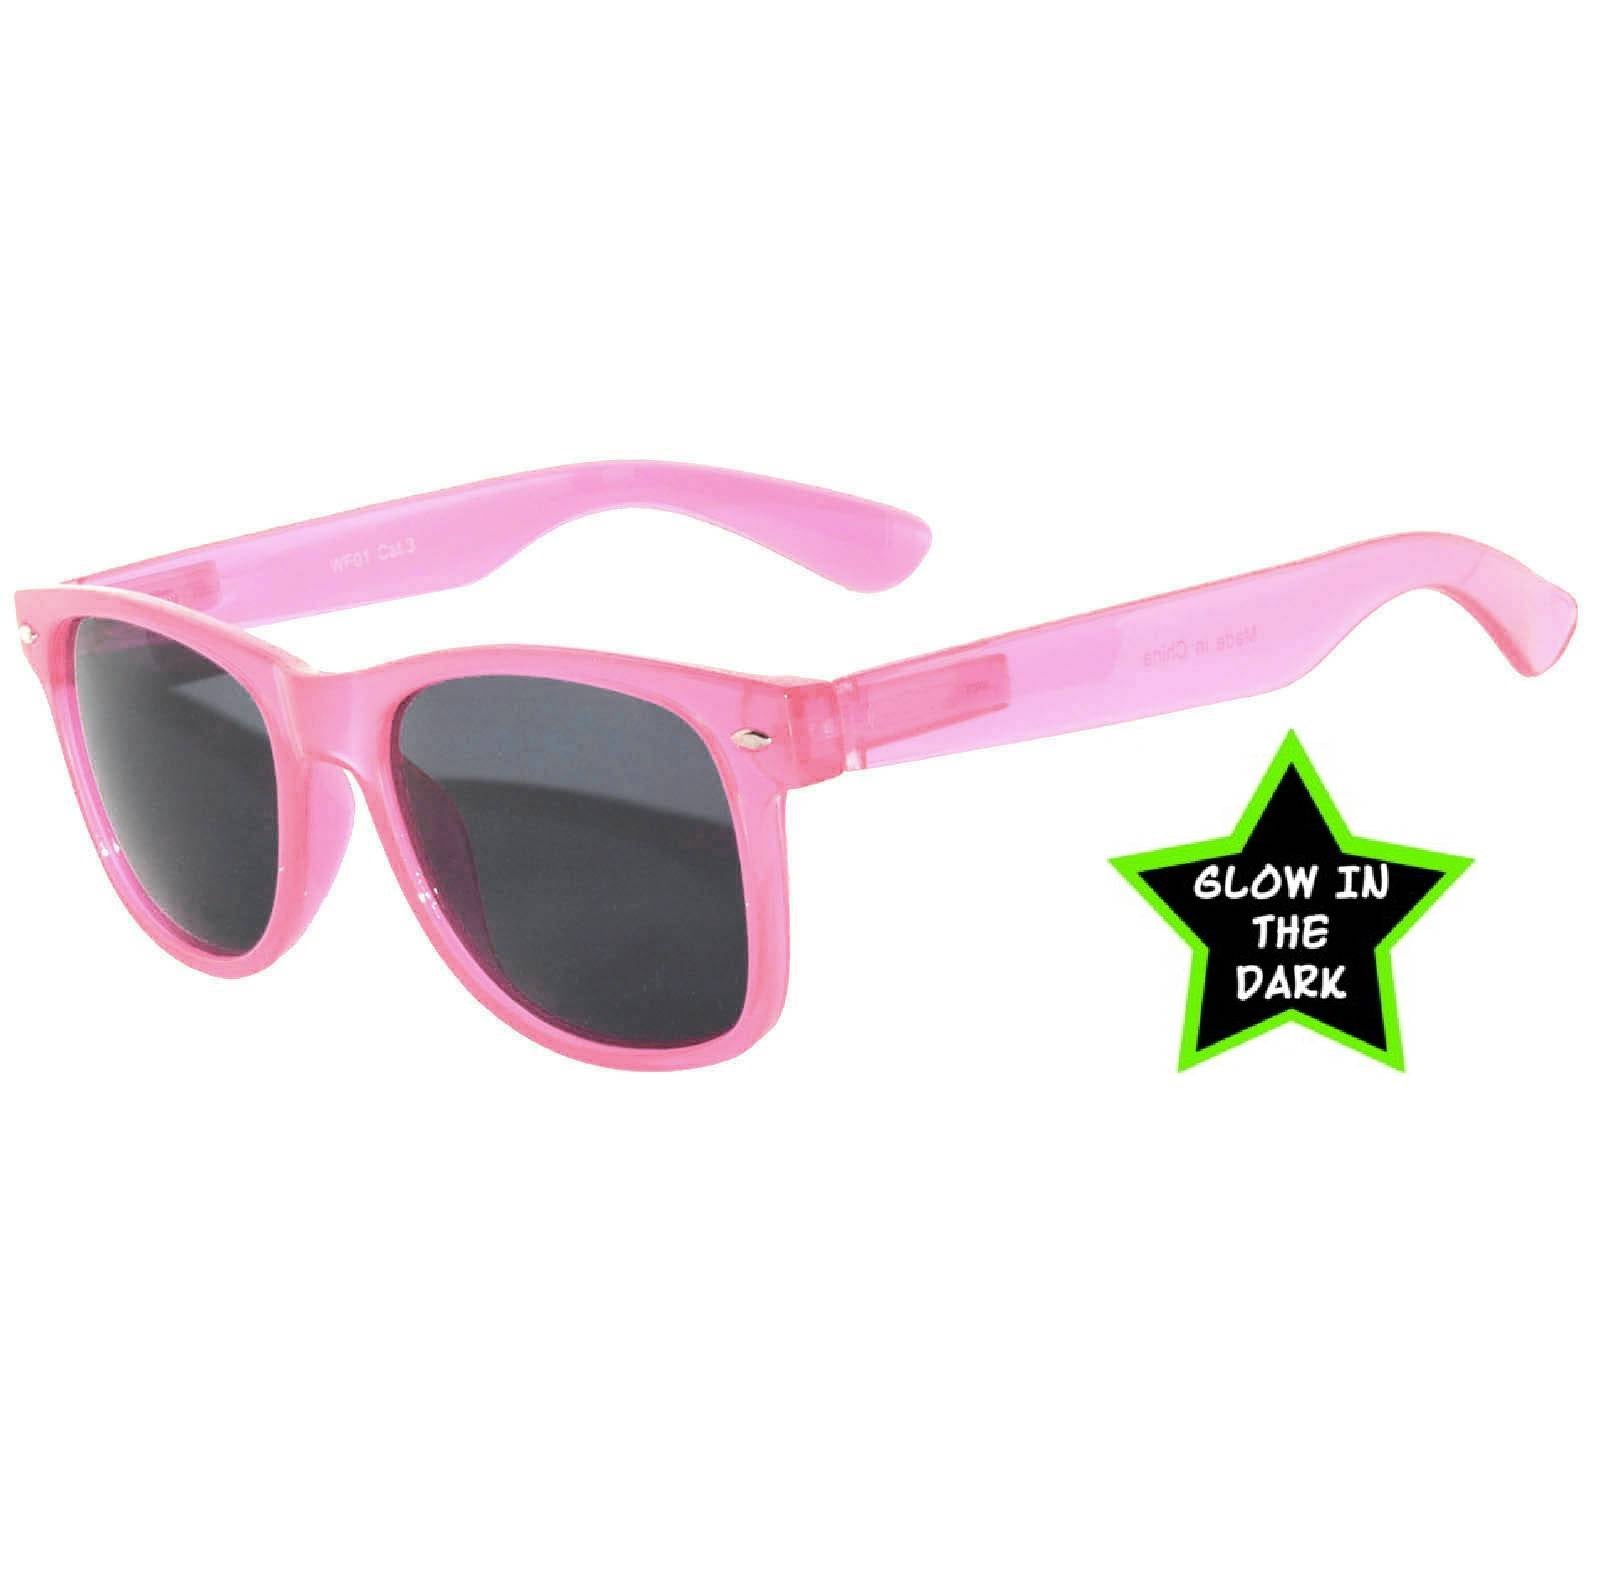 Glow in the Dark Sunglasses - Pink Frame / Smoke Lens